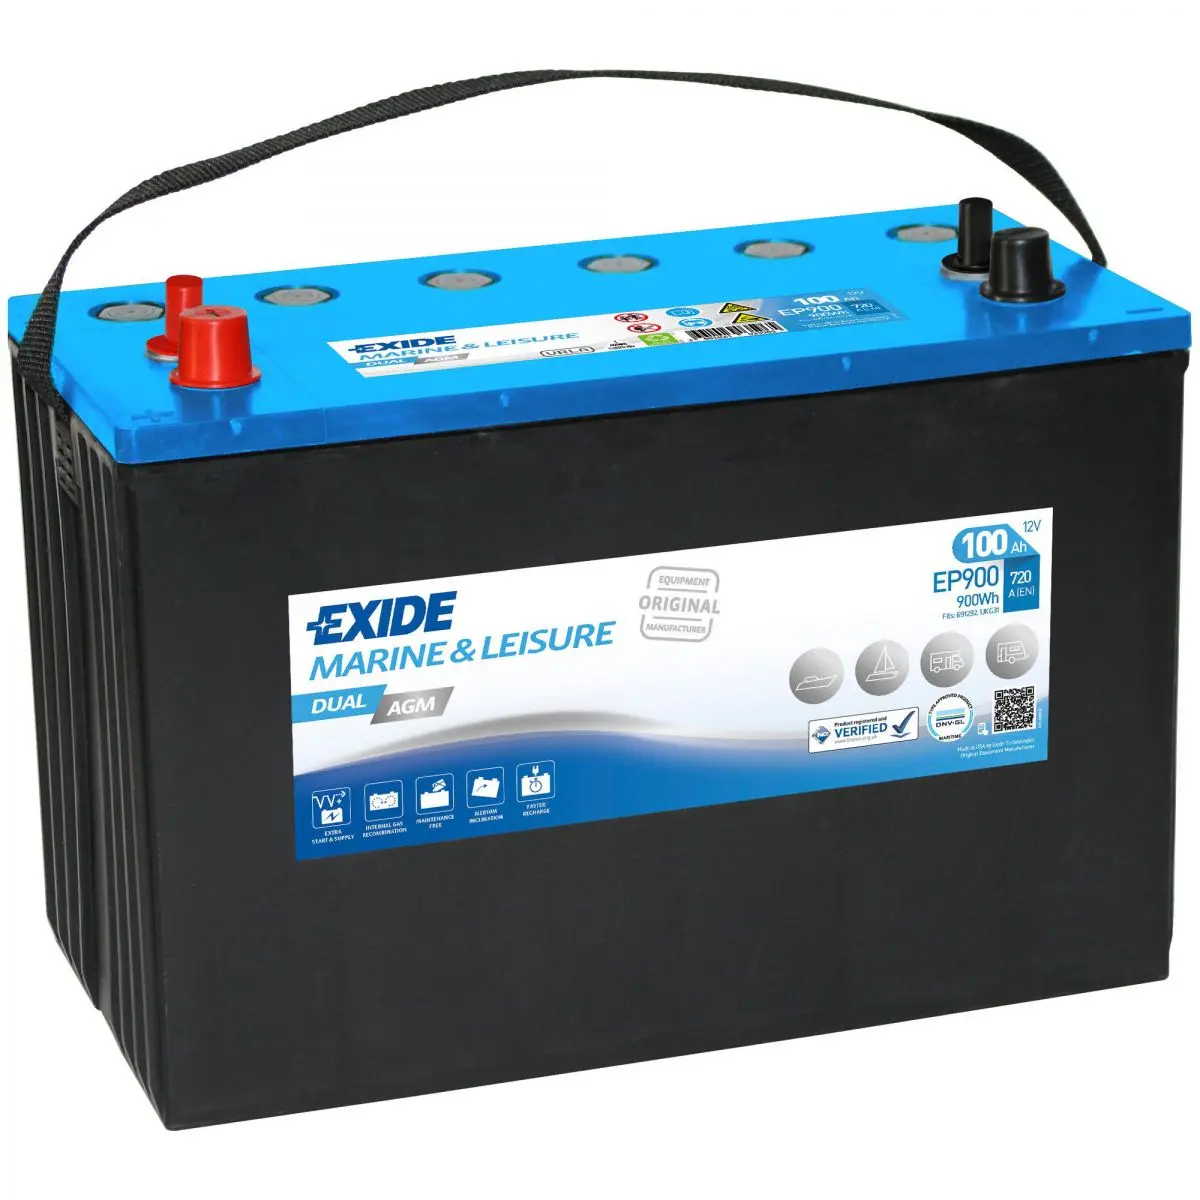 EXIDE Dual AGM - EP 900 akkumulátor